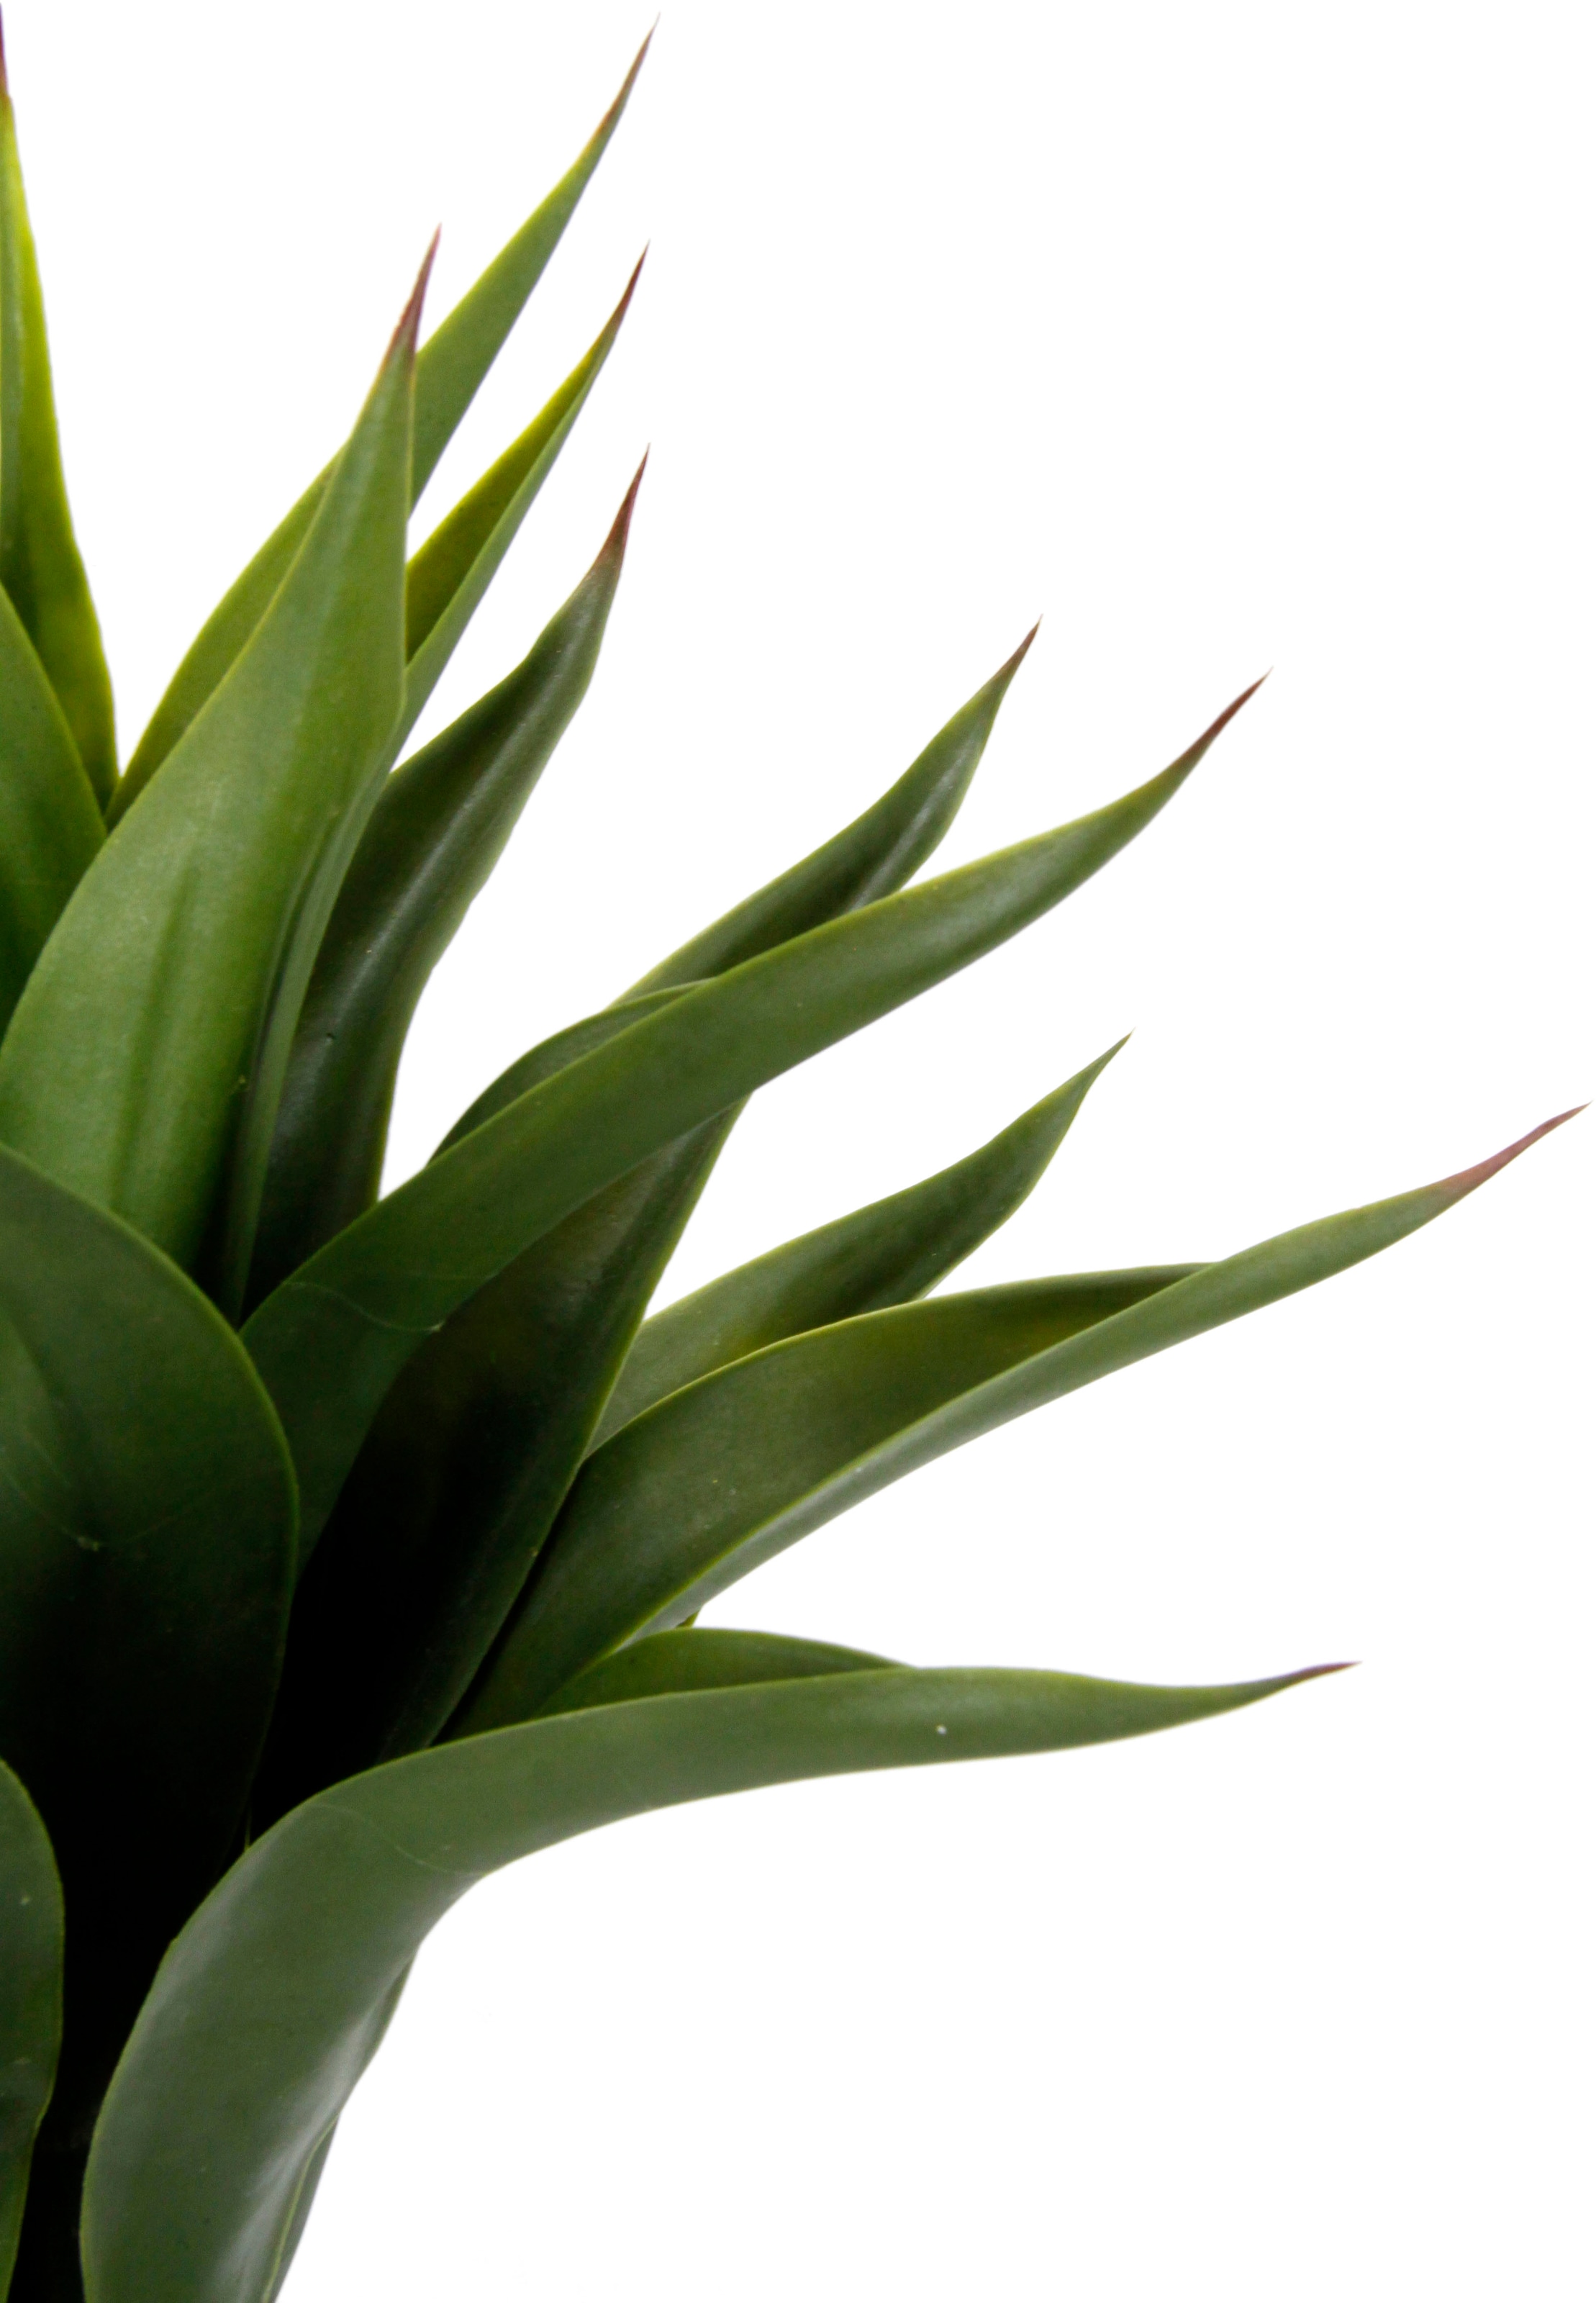 I.GE.A. Kunstpflanze »Künstliche Agave im Topf Pflanze Aloe Vera Sansevieria«, Grünpflanze Zimmerpflanze Palme